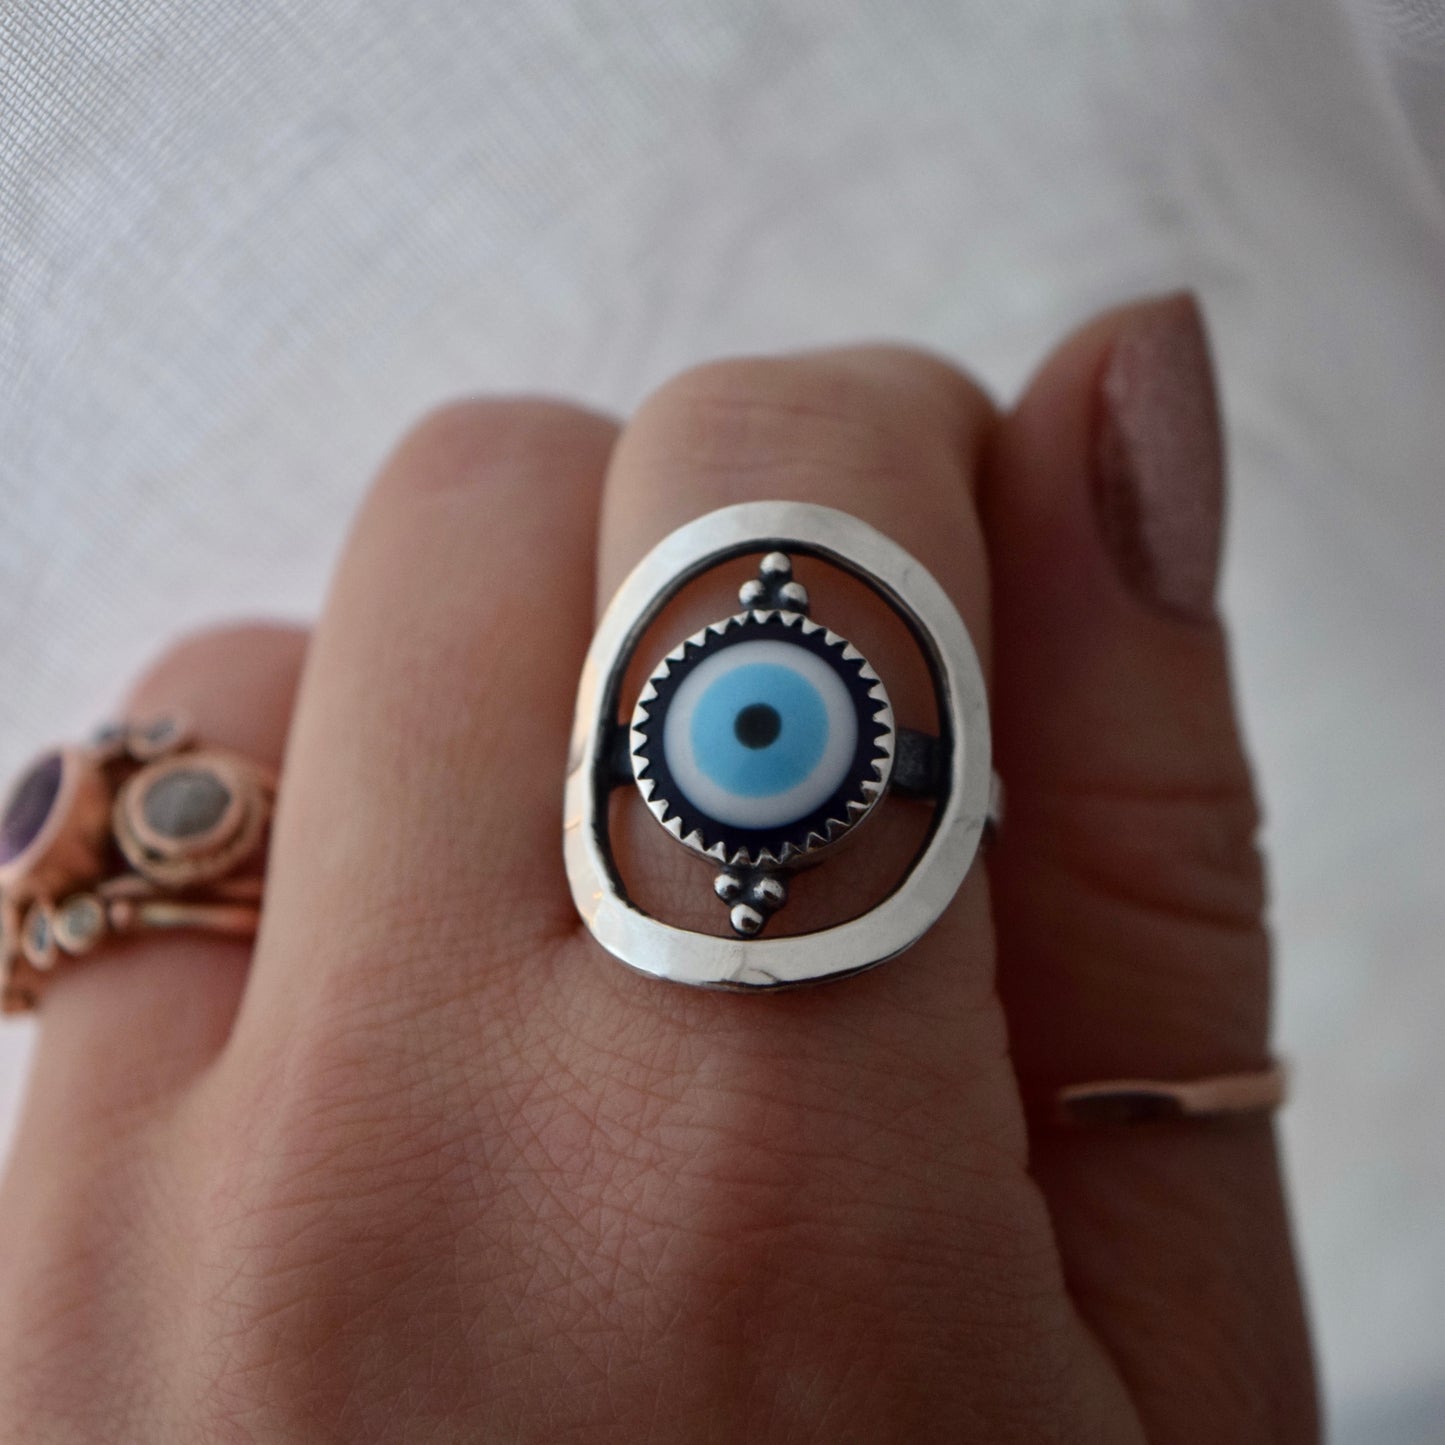 Enchanted Eye ring size 8